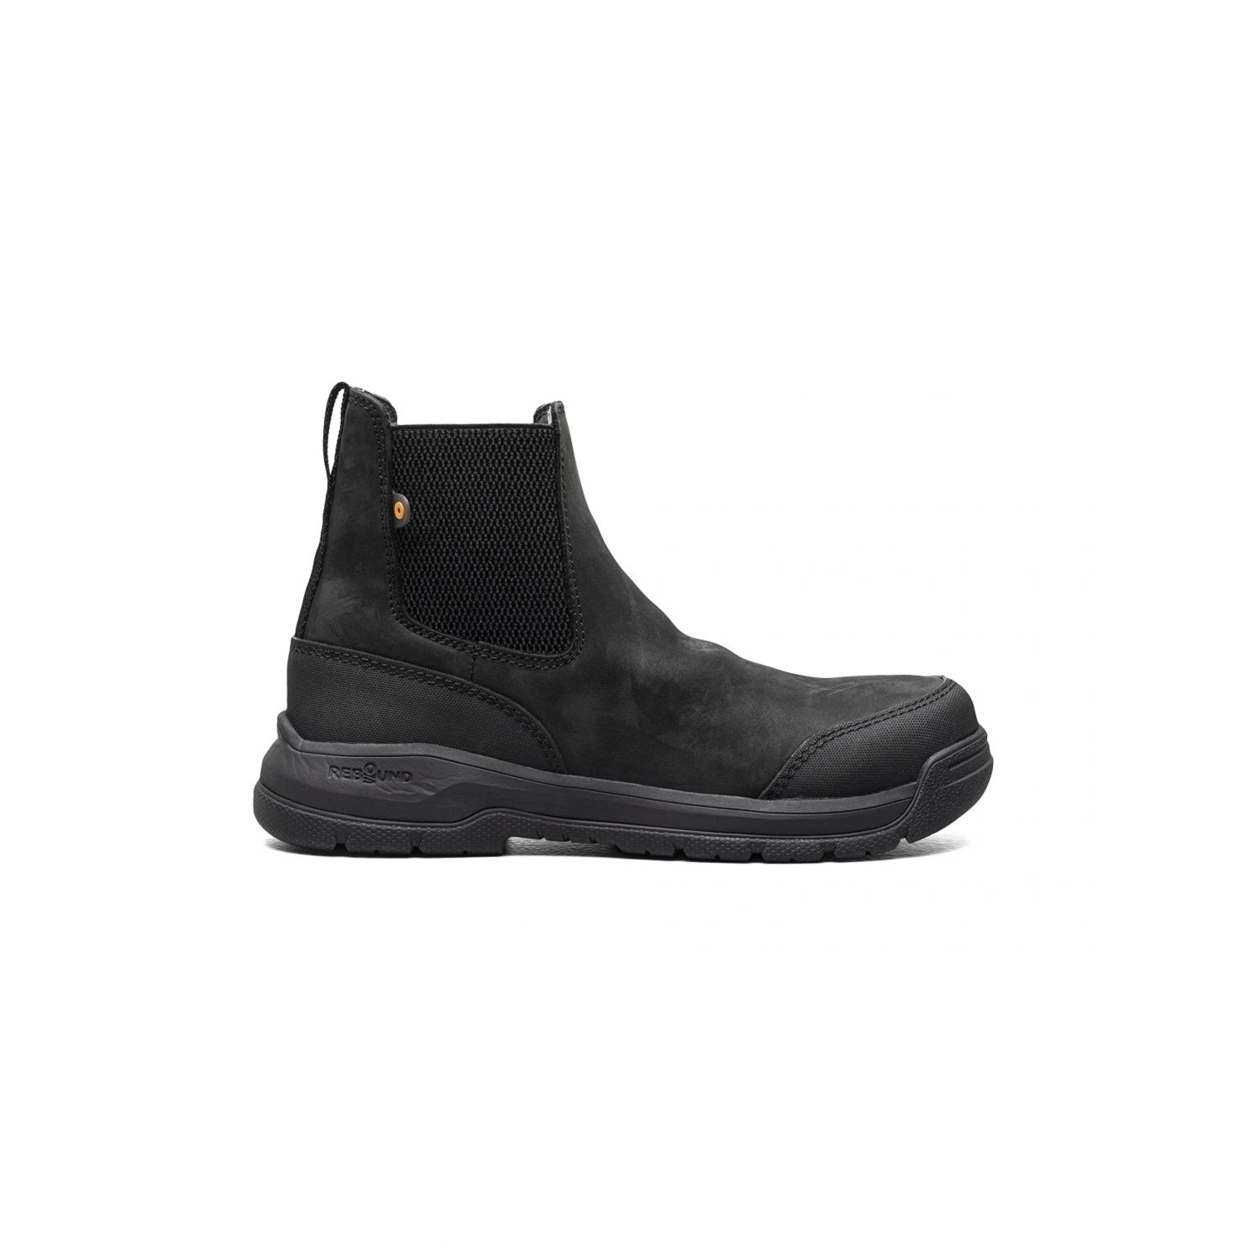 BOGS WORK SERIES Women's Shale Leather Chelsea Composite Toe Waterproof Work Boot Black - 72920CT-001 BLACK - BLACK, 9